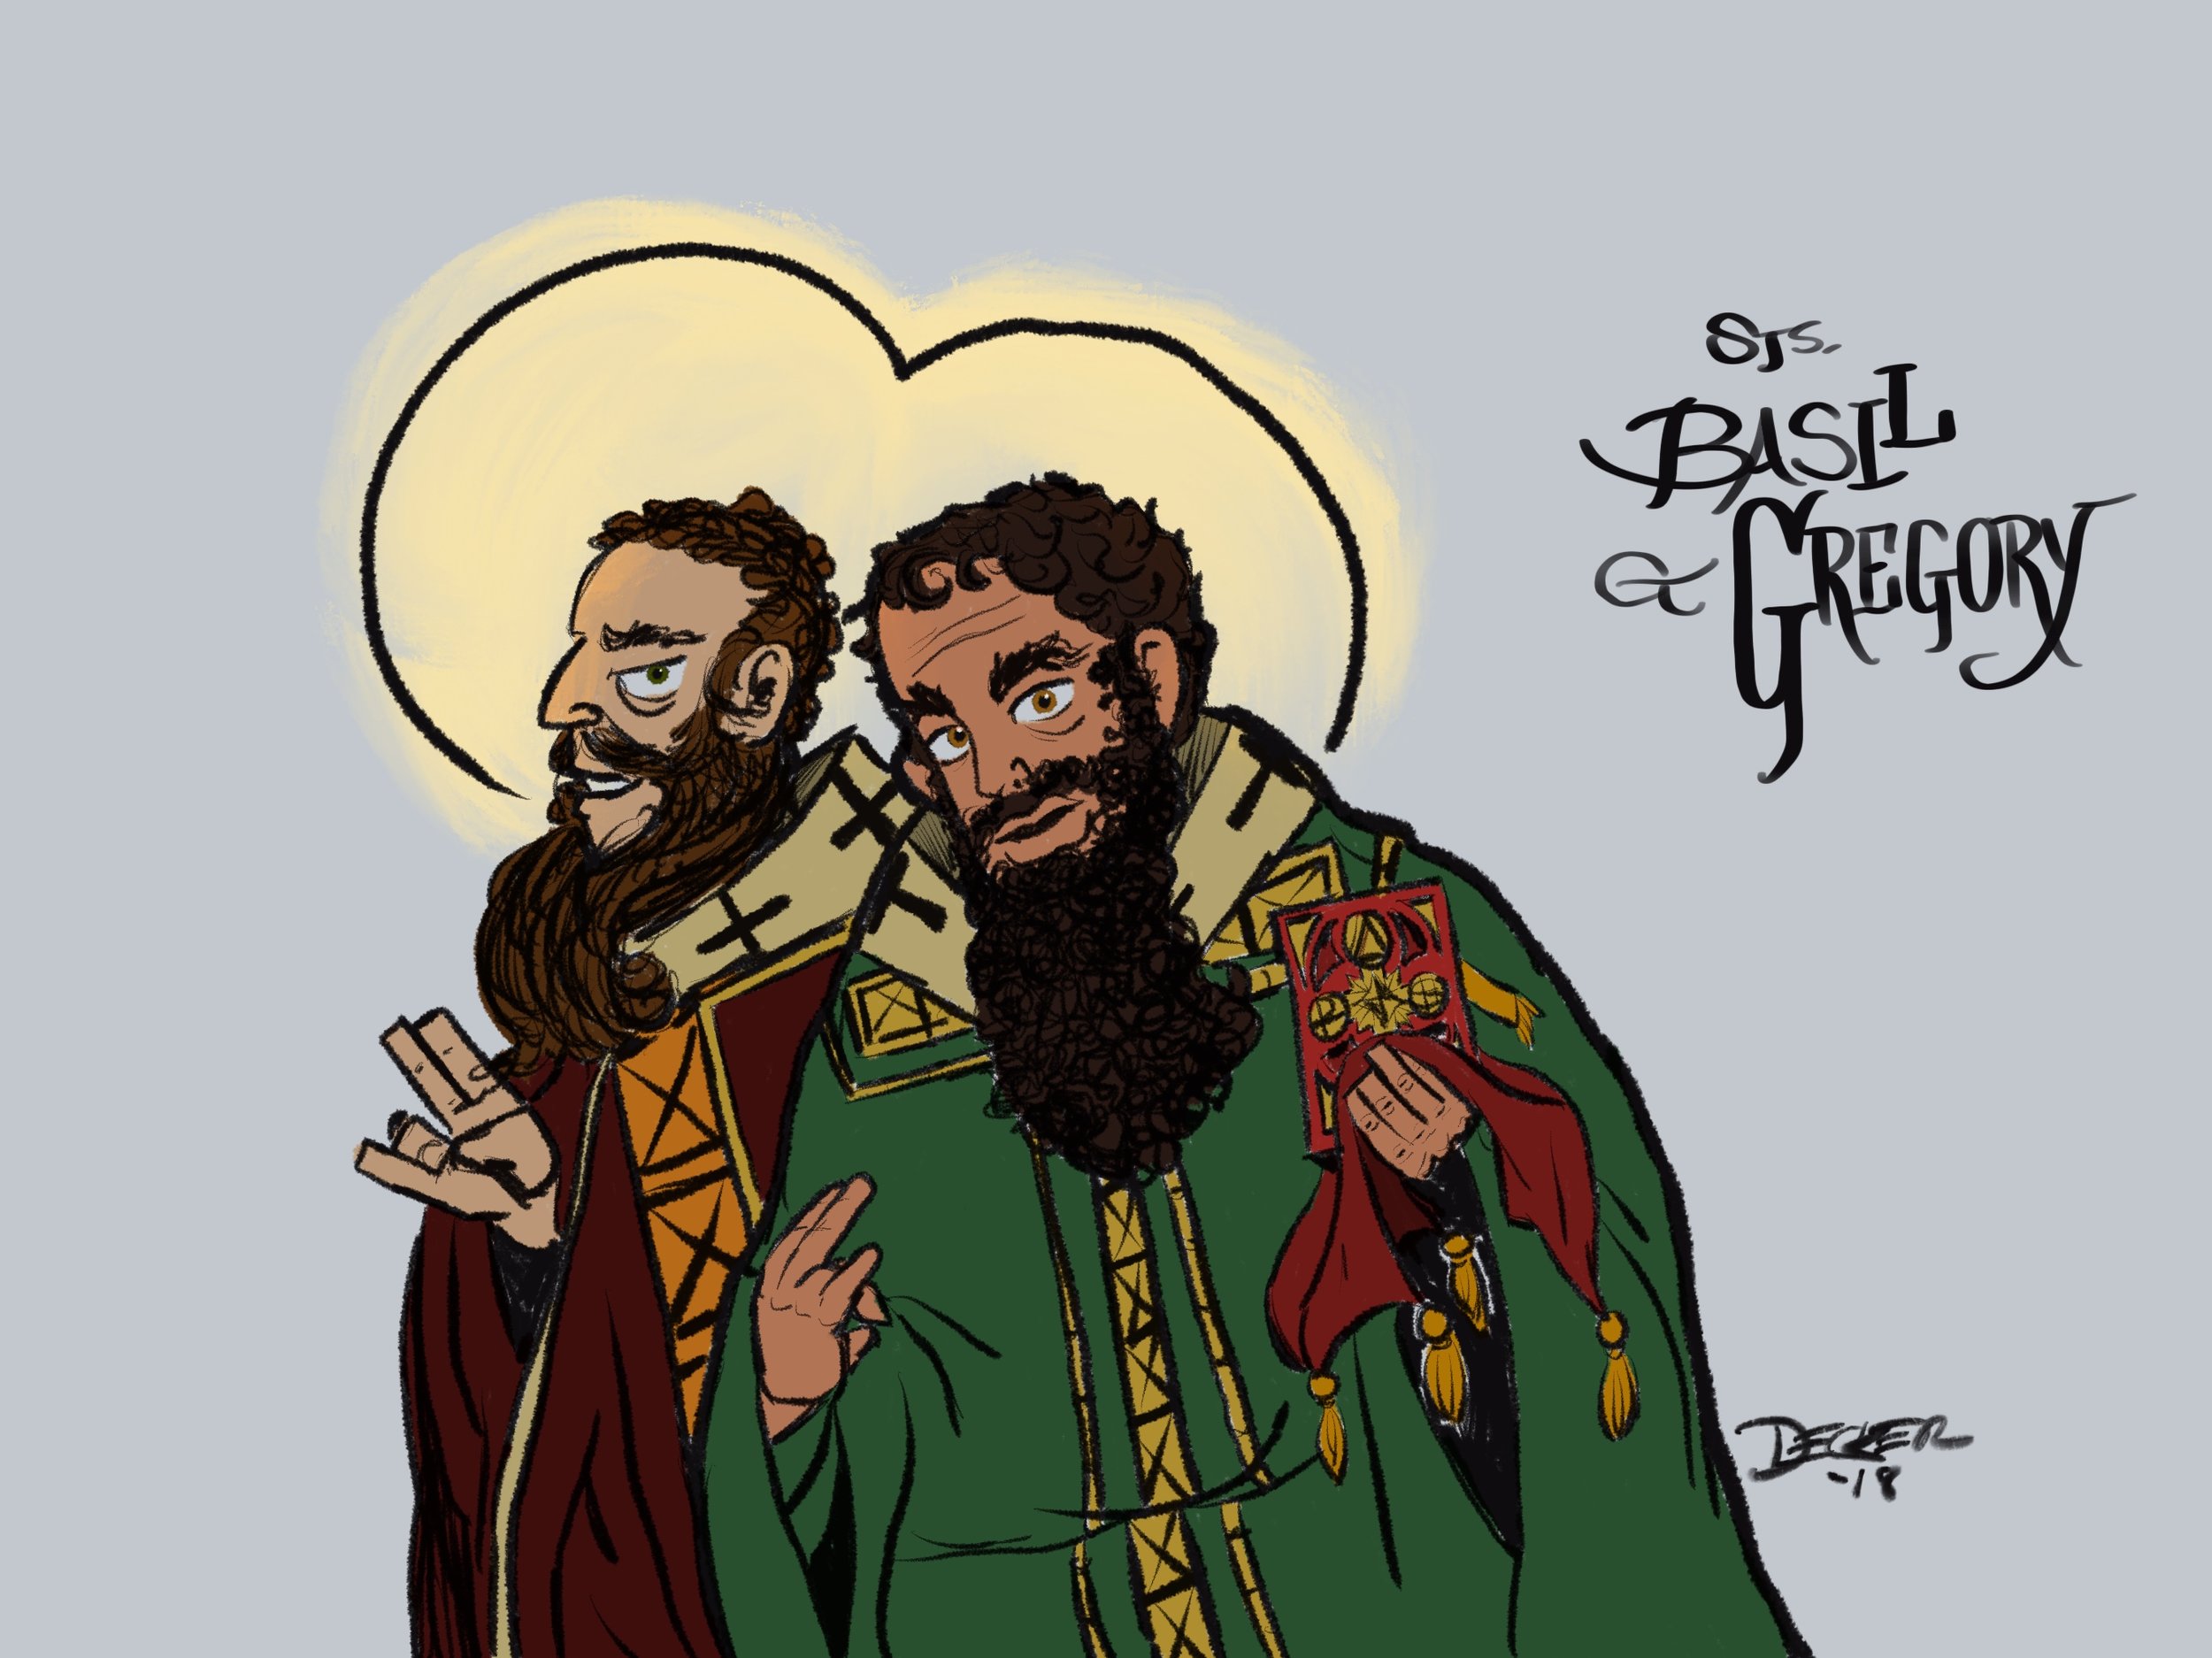 Saints Basil & Gregory